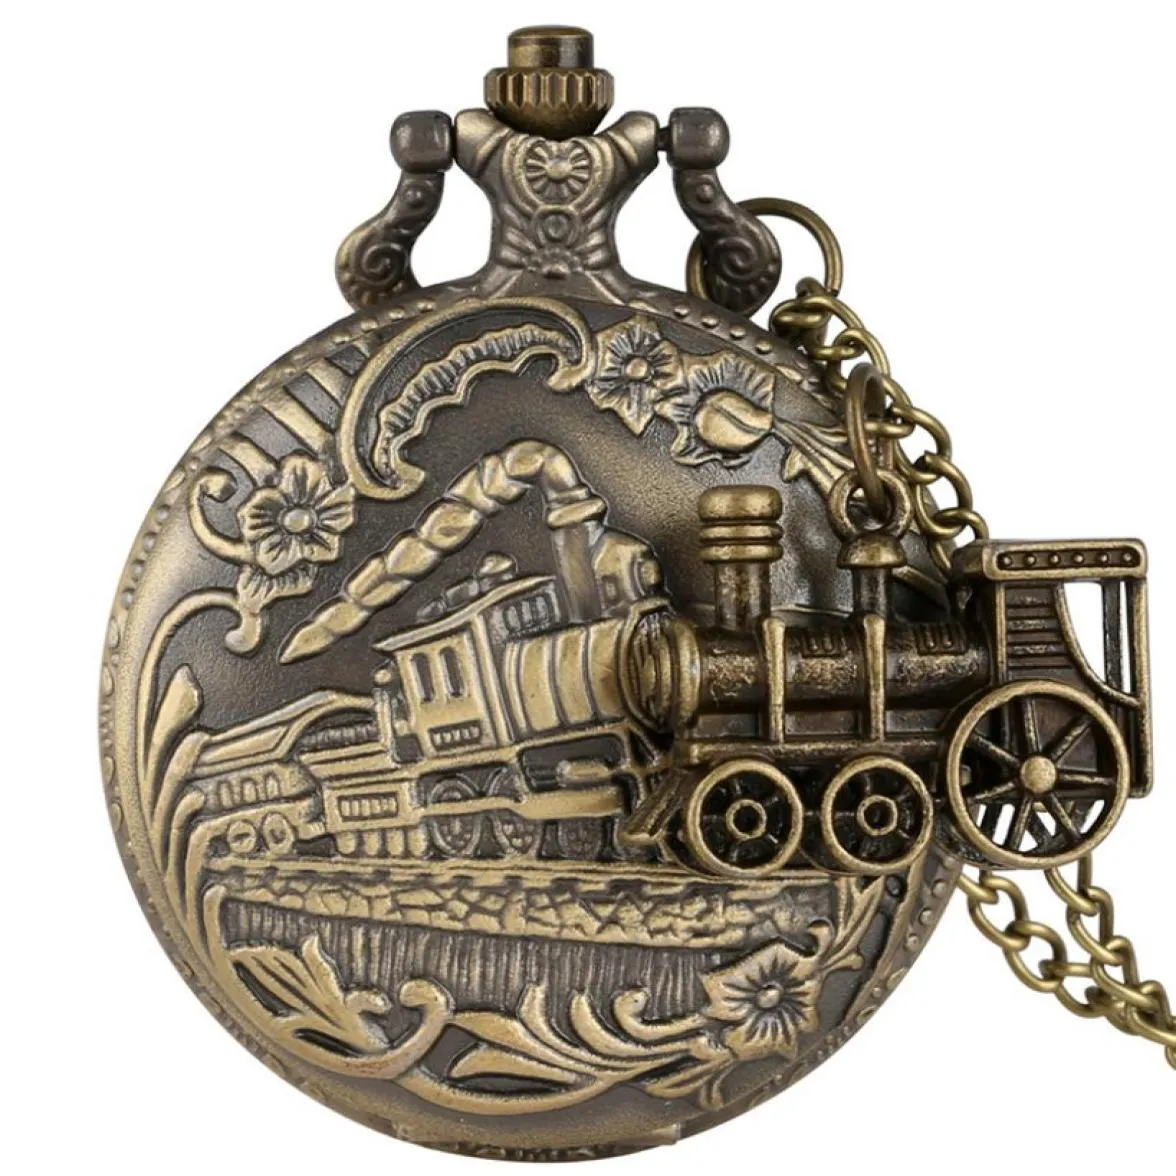 Vine Retro 3D Steam Train Pocket Watch с цепочкой ожерелья локомотив дизайн мужчины женщины антикварные кварцевые часы collectab3395207